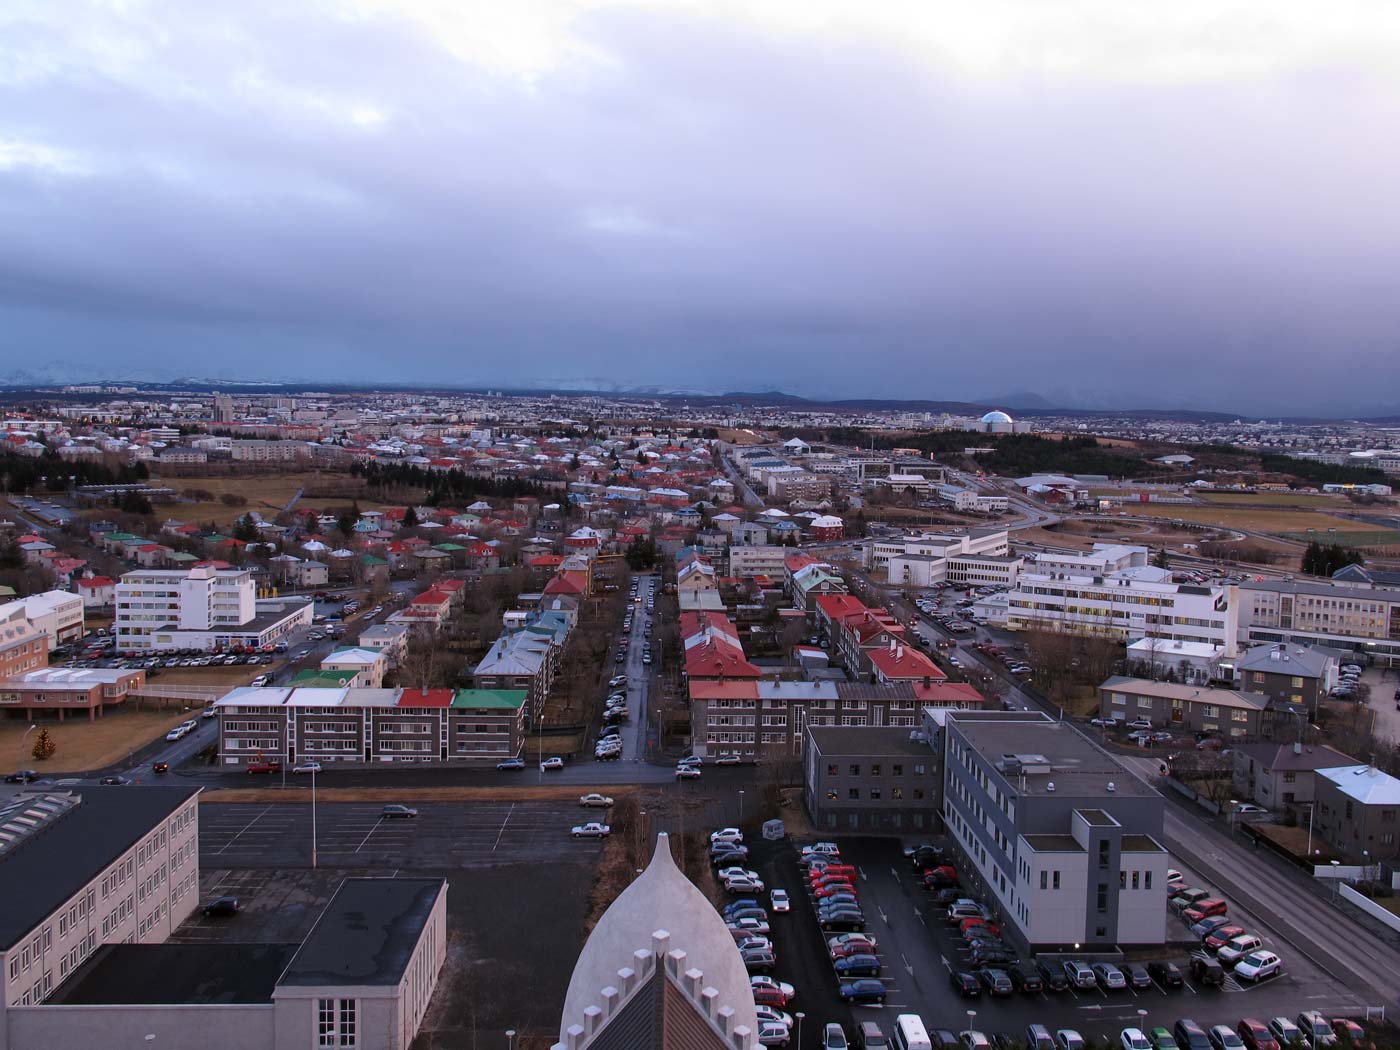 Reykjavík. Pictures taken from the highest spot (Hallgrímskirkja chruch). - SSE. (20 December 2012)